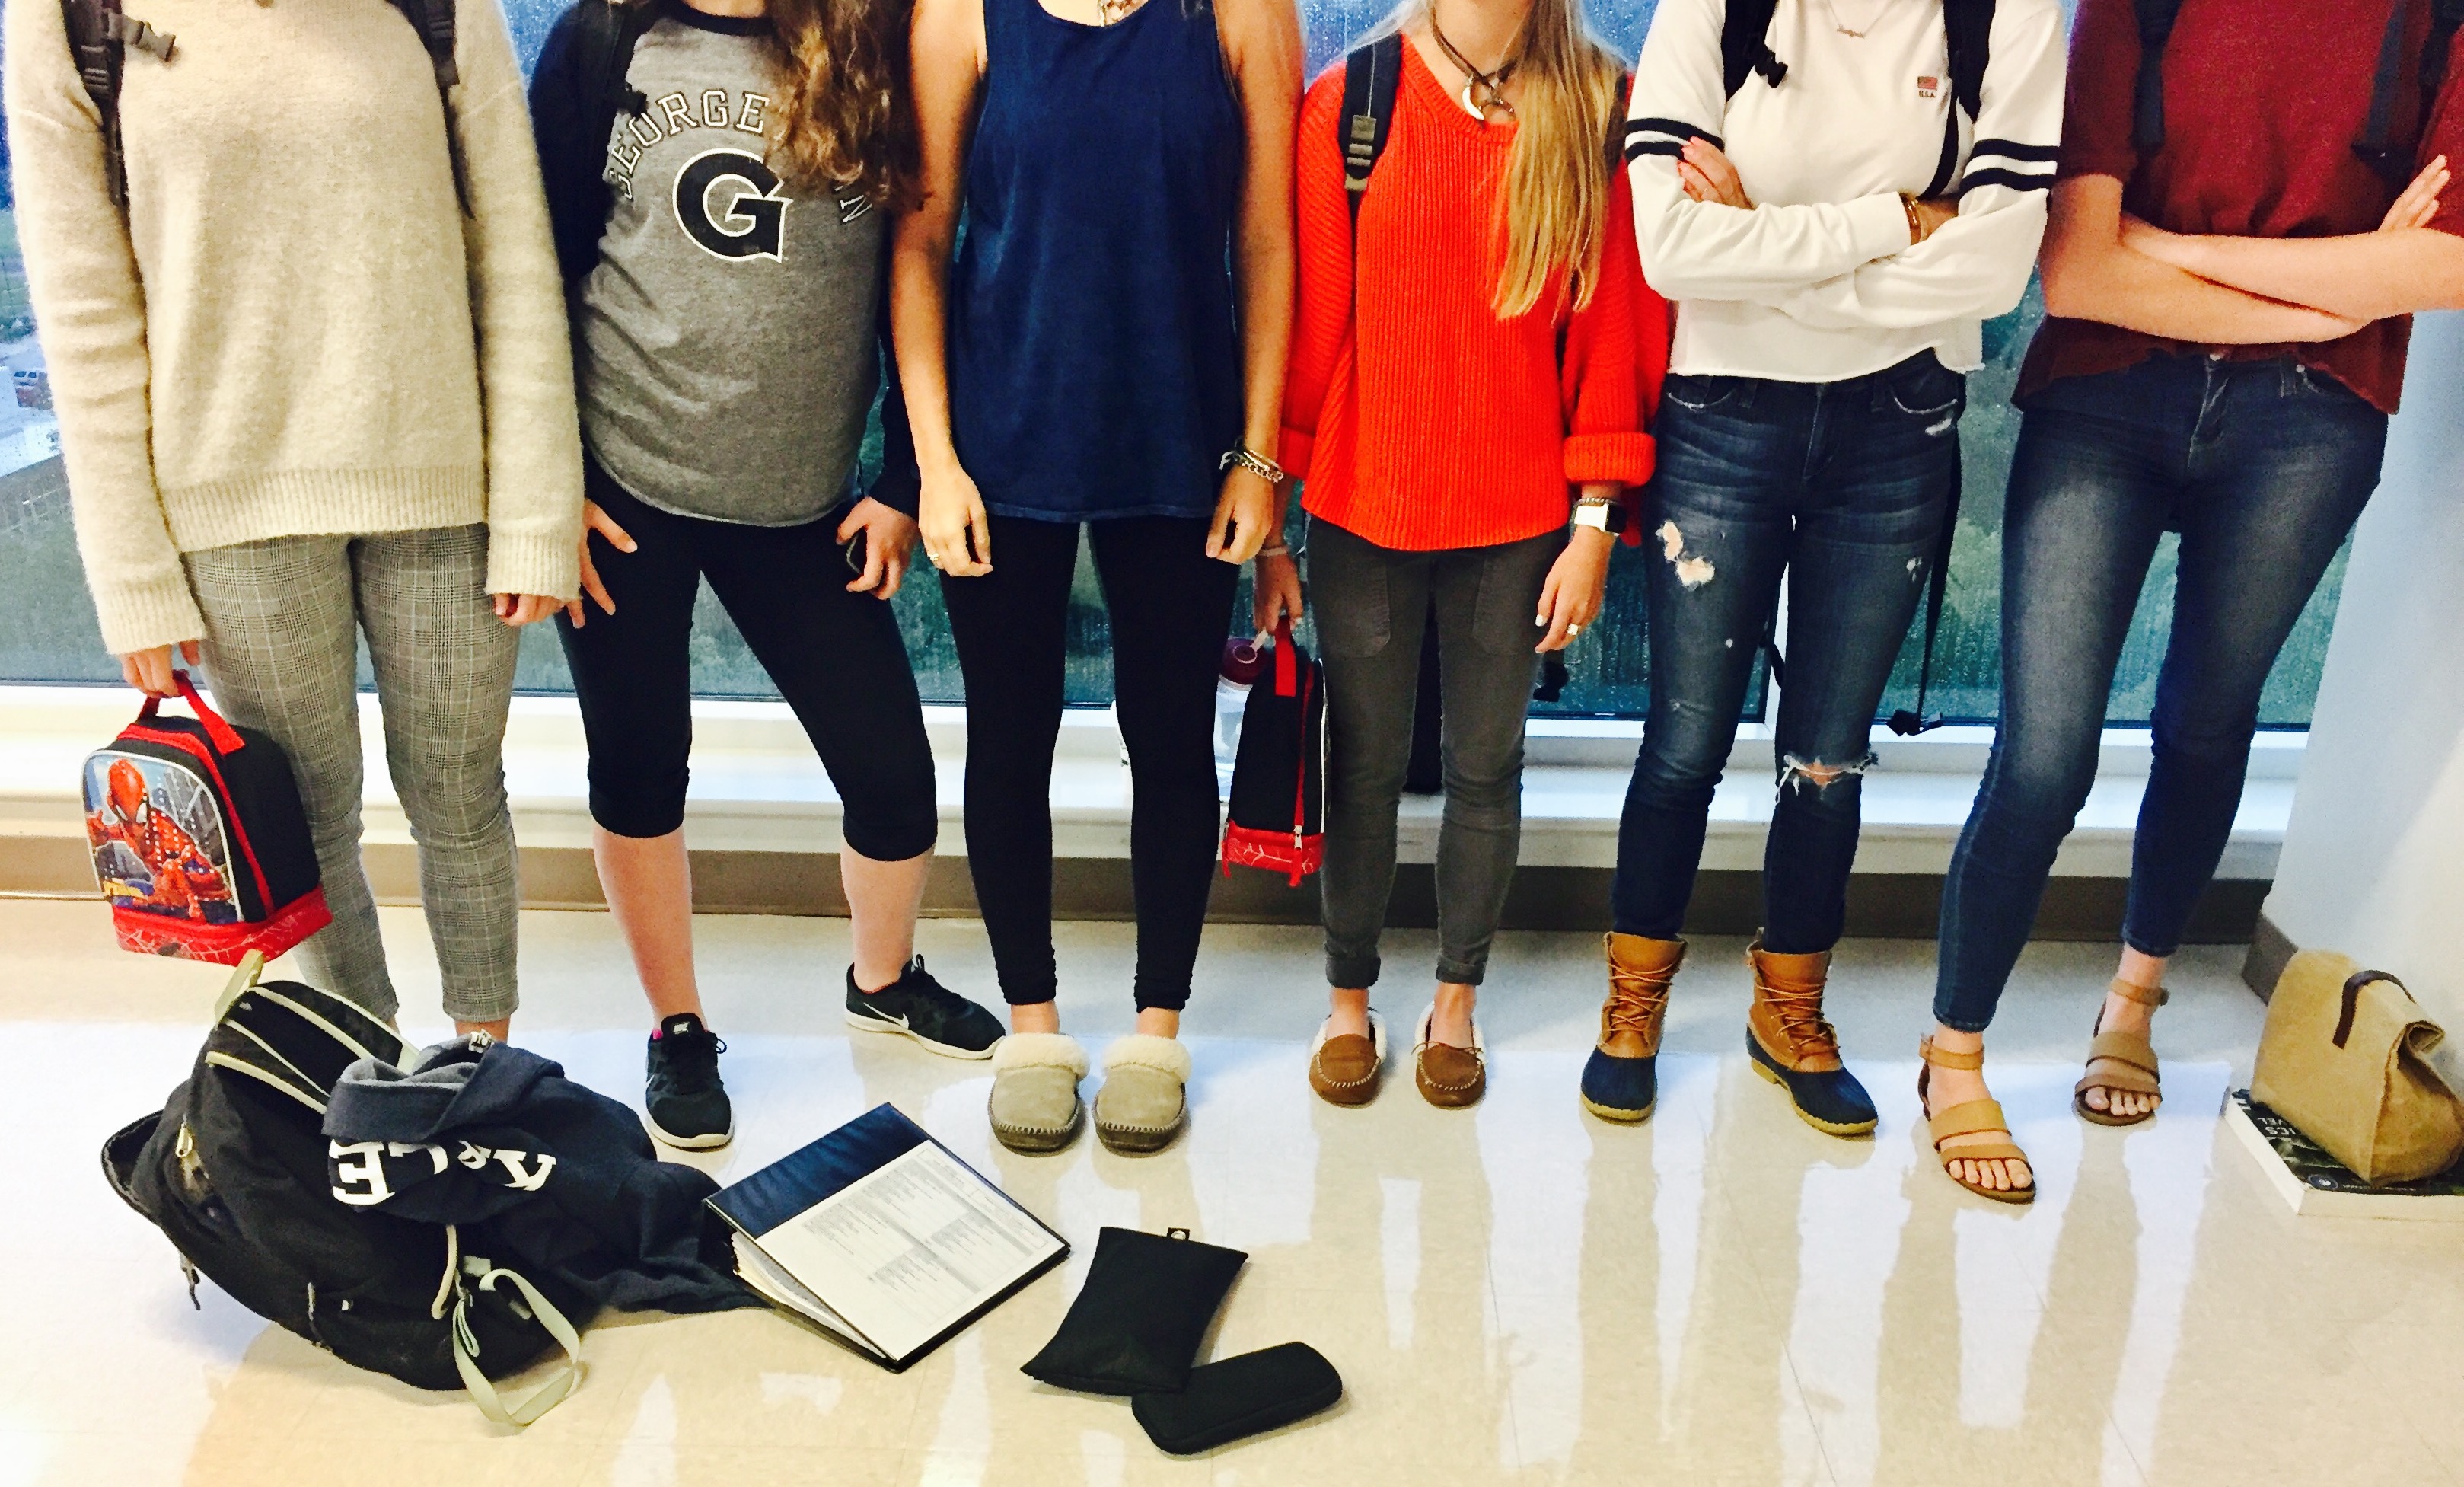 Should school dress codes prohibit girls from wearing leggings?